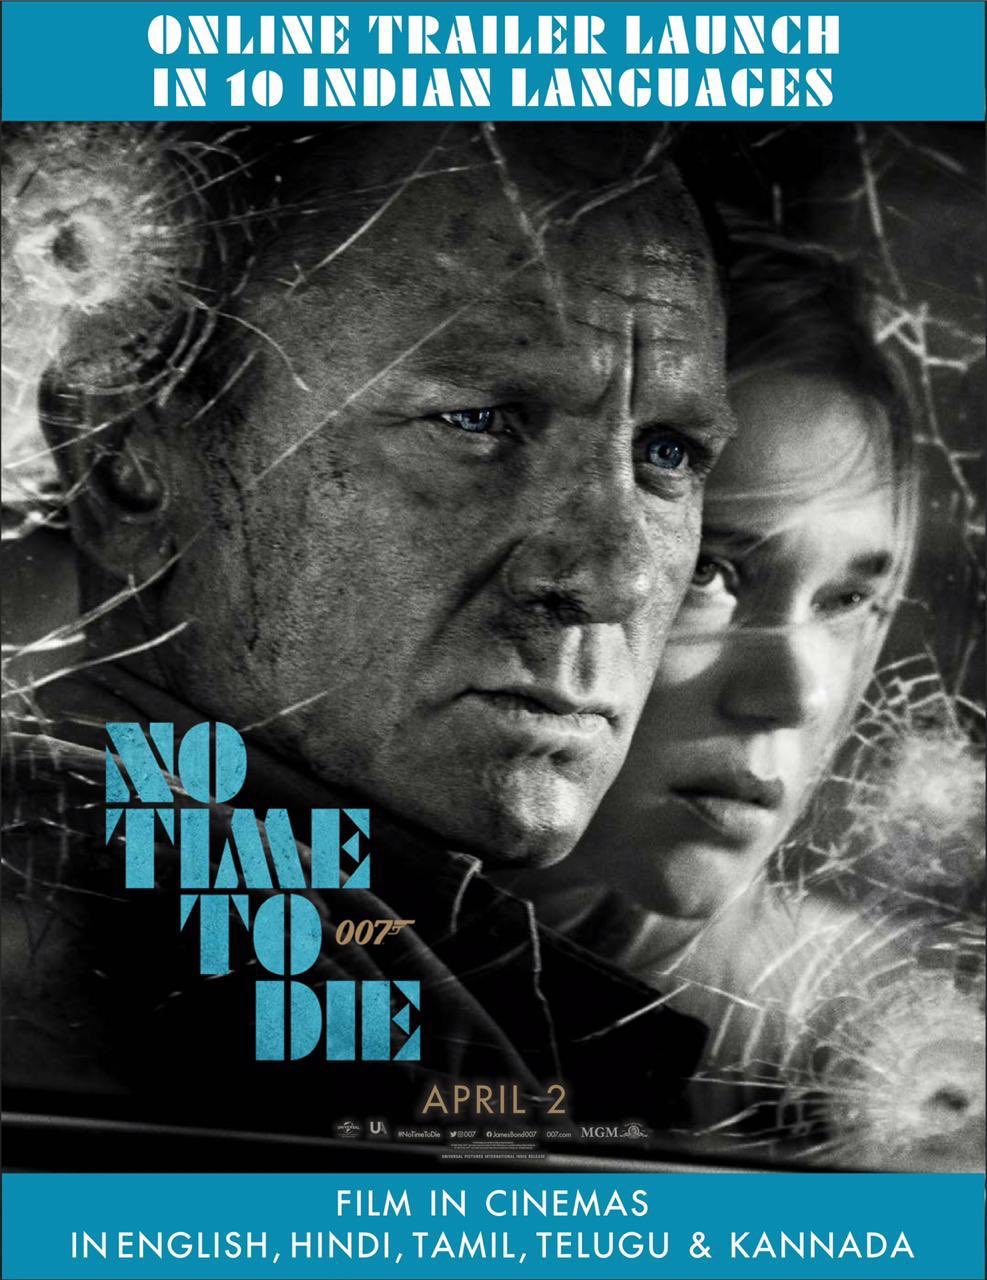 James bond No time to Die trailer